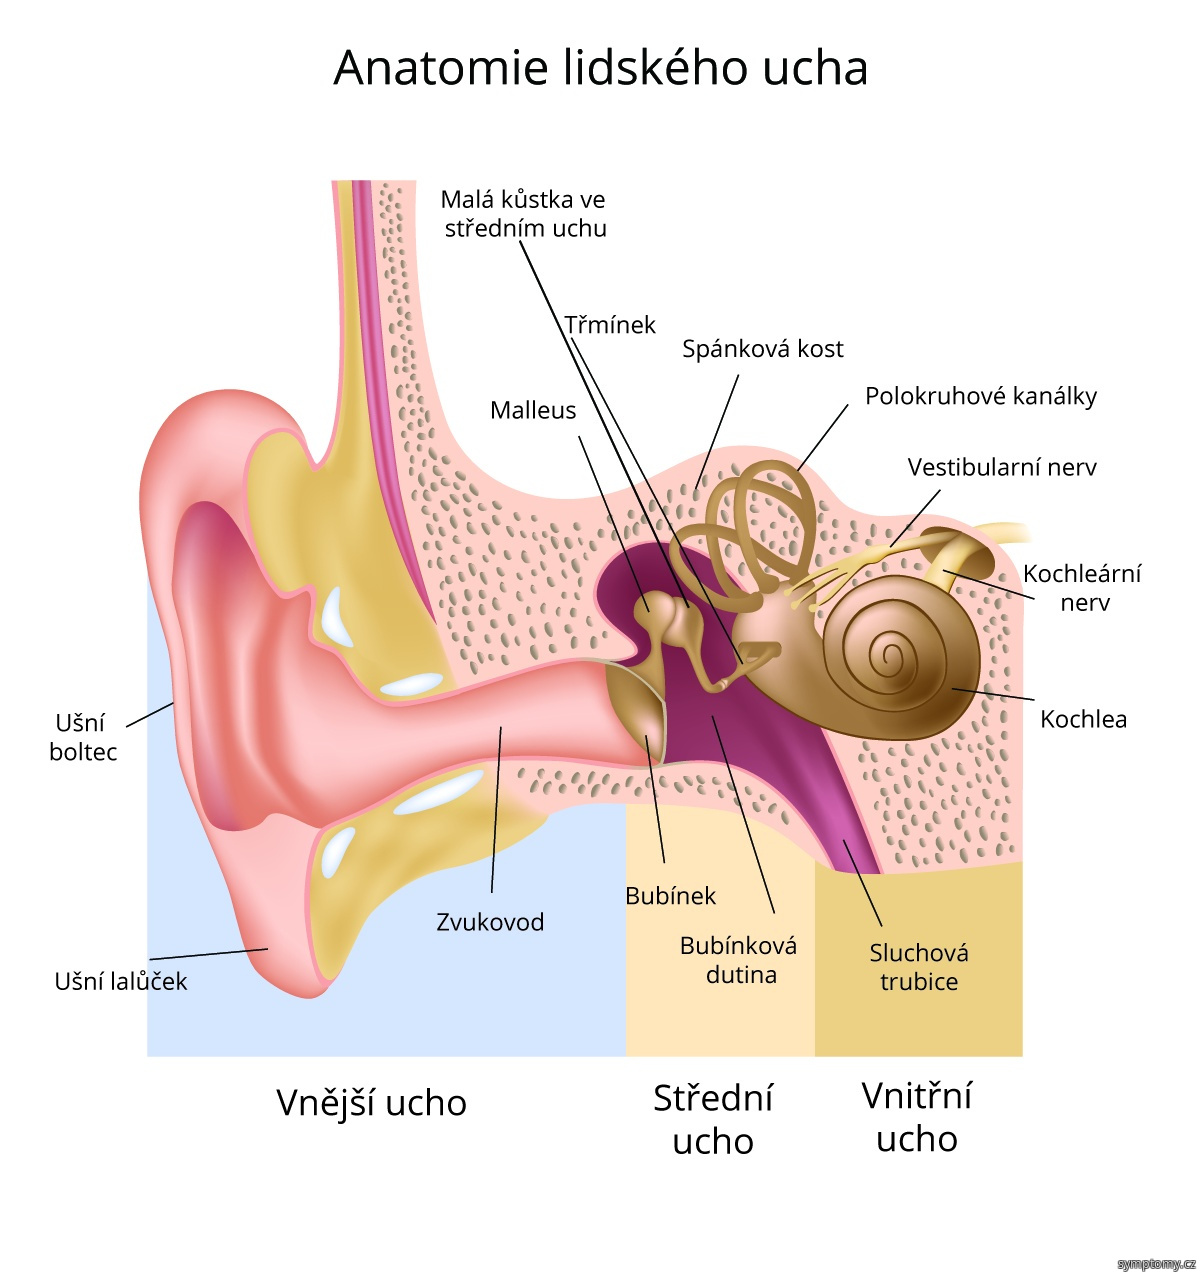 Anatomie lidského ucha